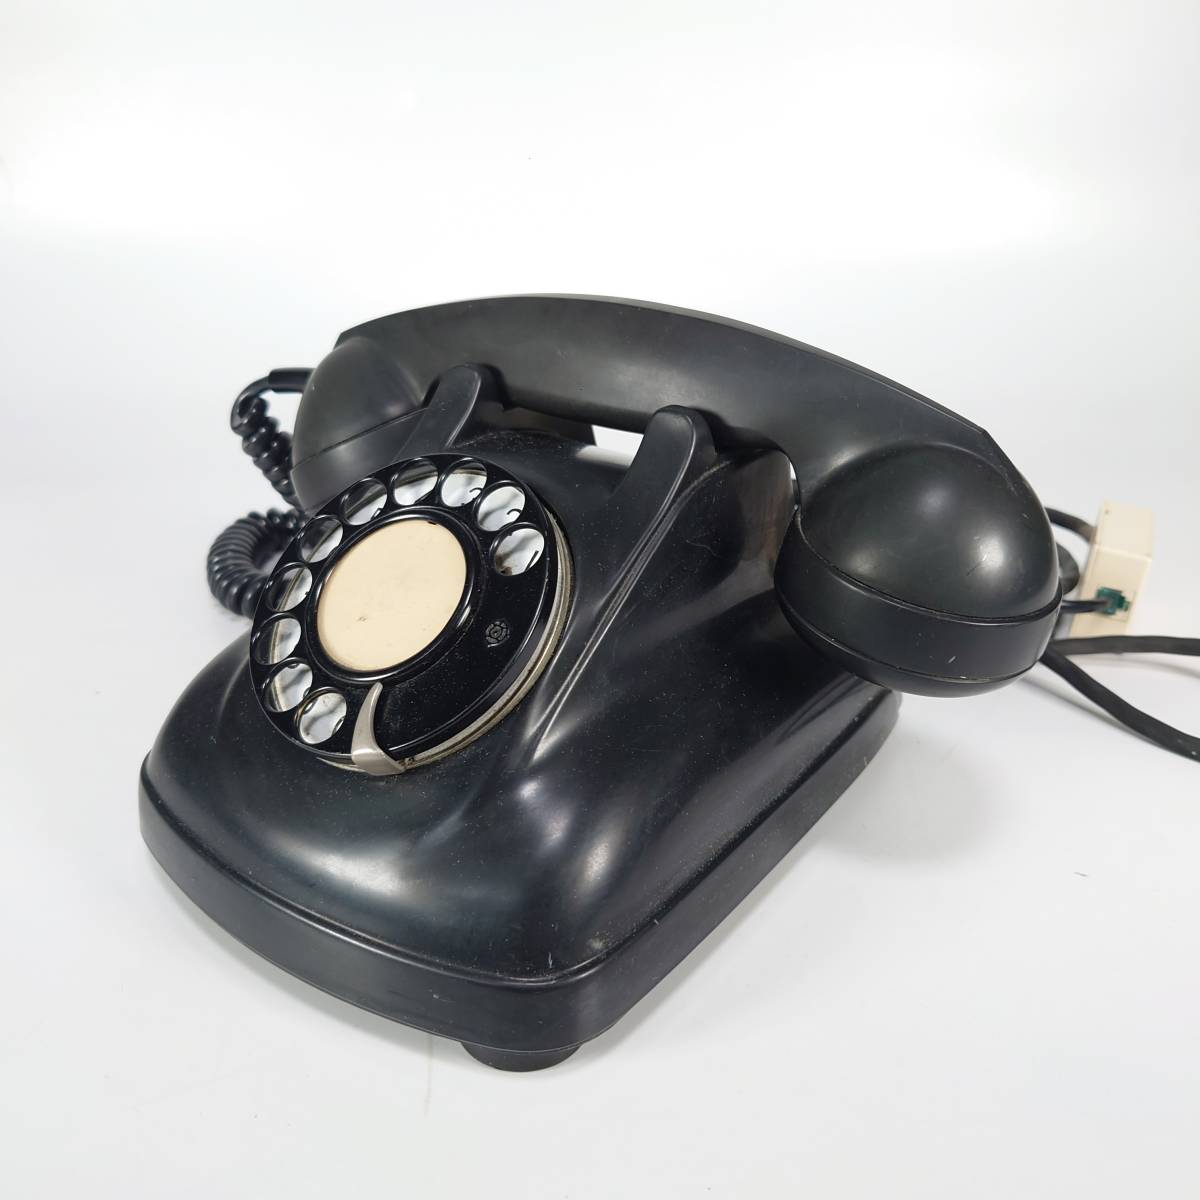  electro- electro- . company black telephone 4-A Japan electro- confidence telephone . company 72.Z Showa Retro telephone machine dial telephone antique Vintage present condition goods 